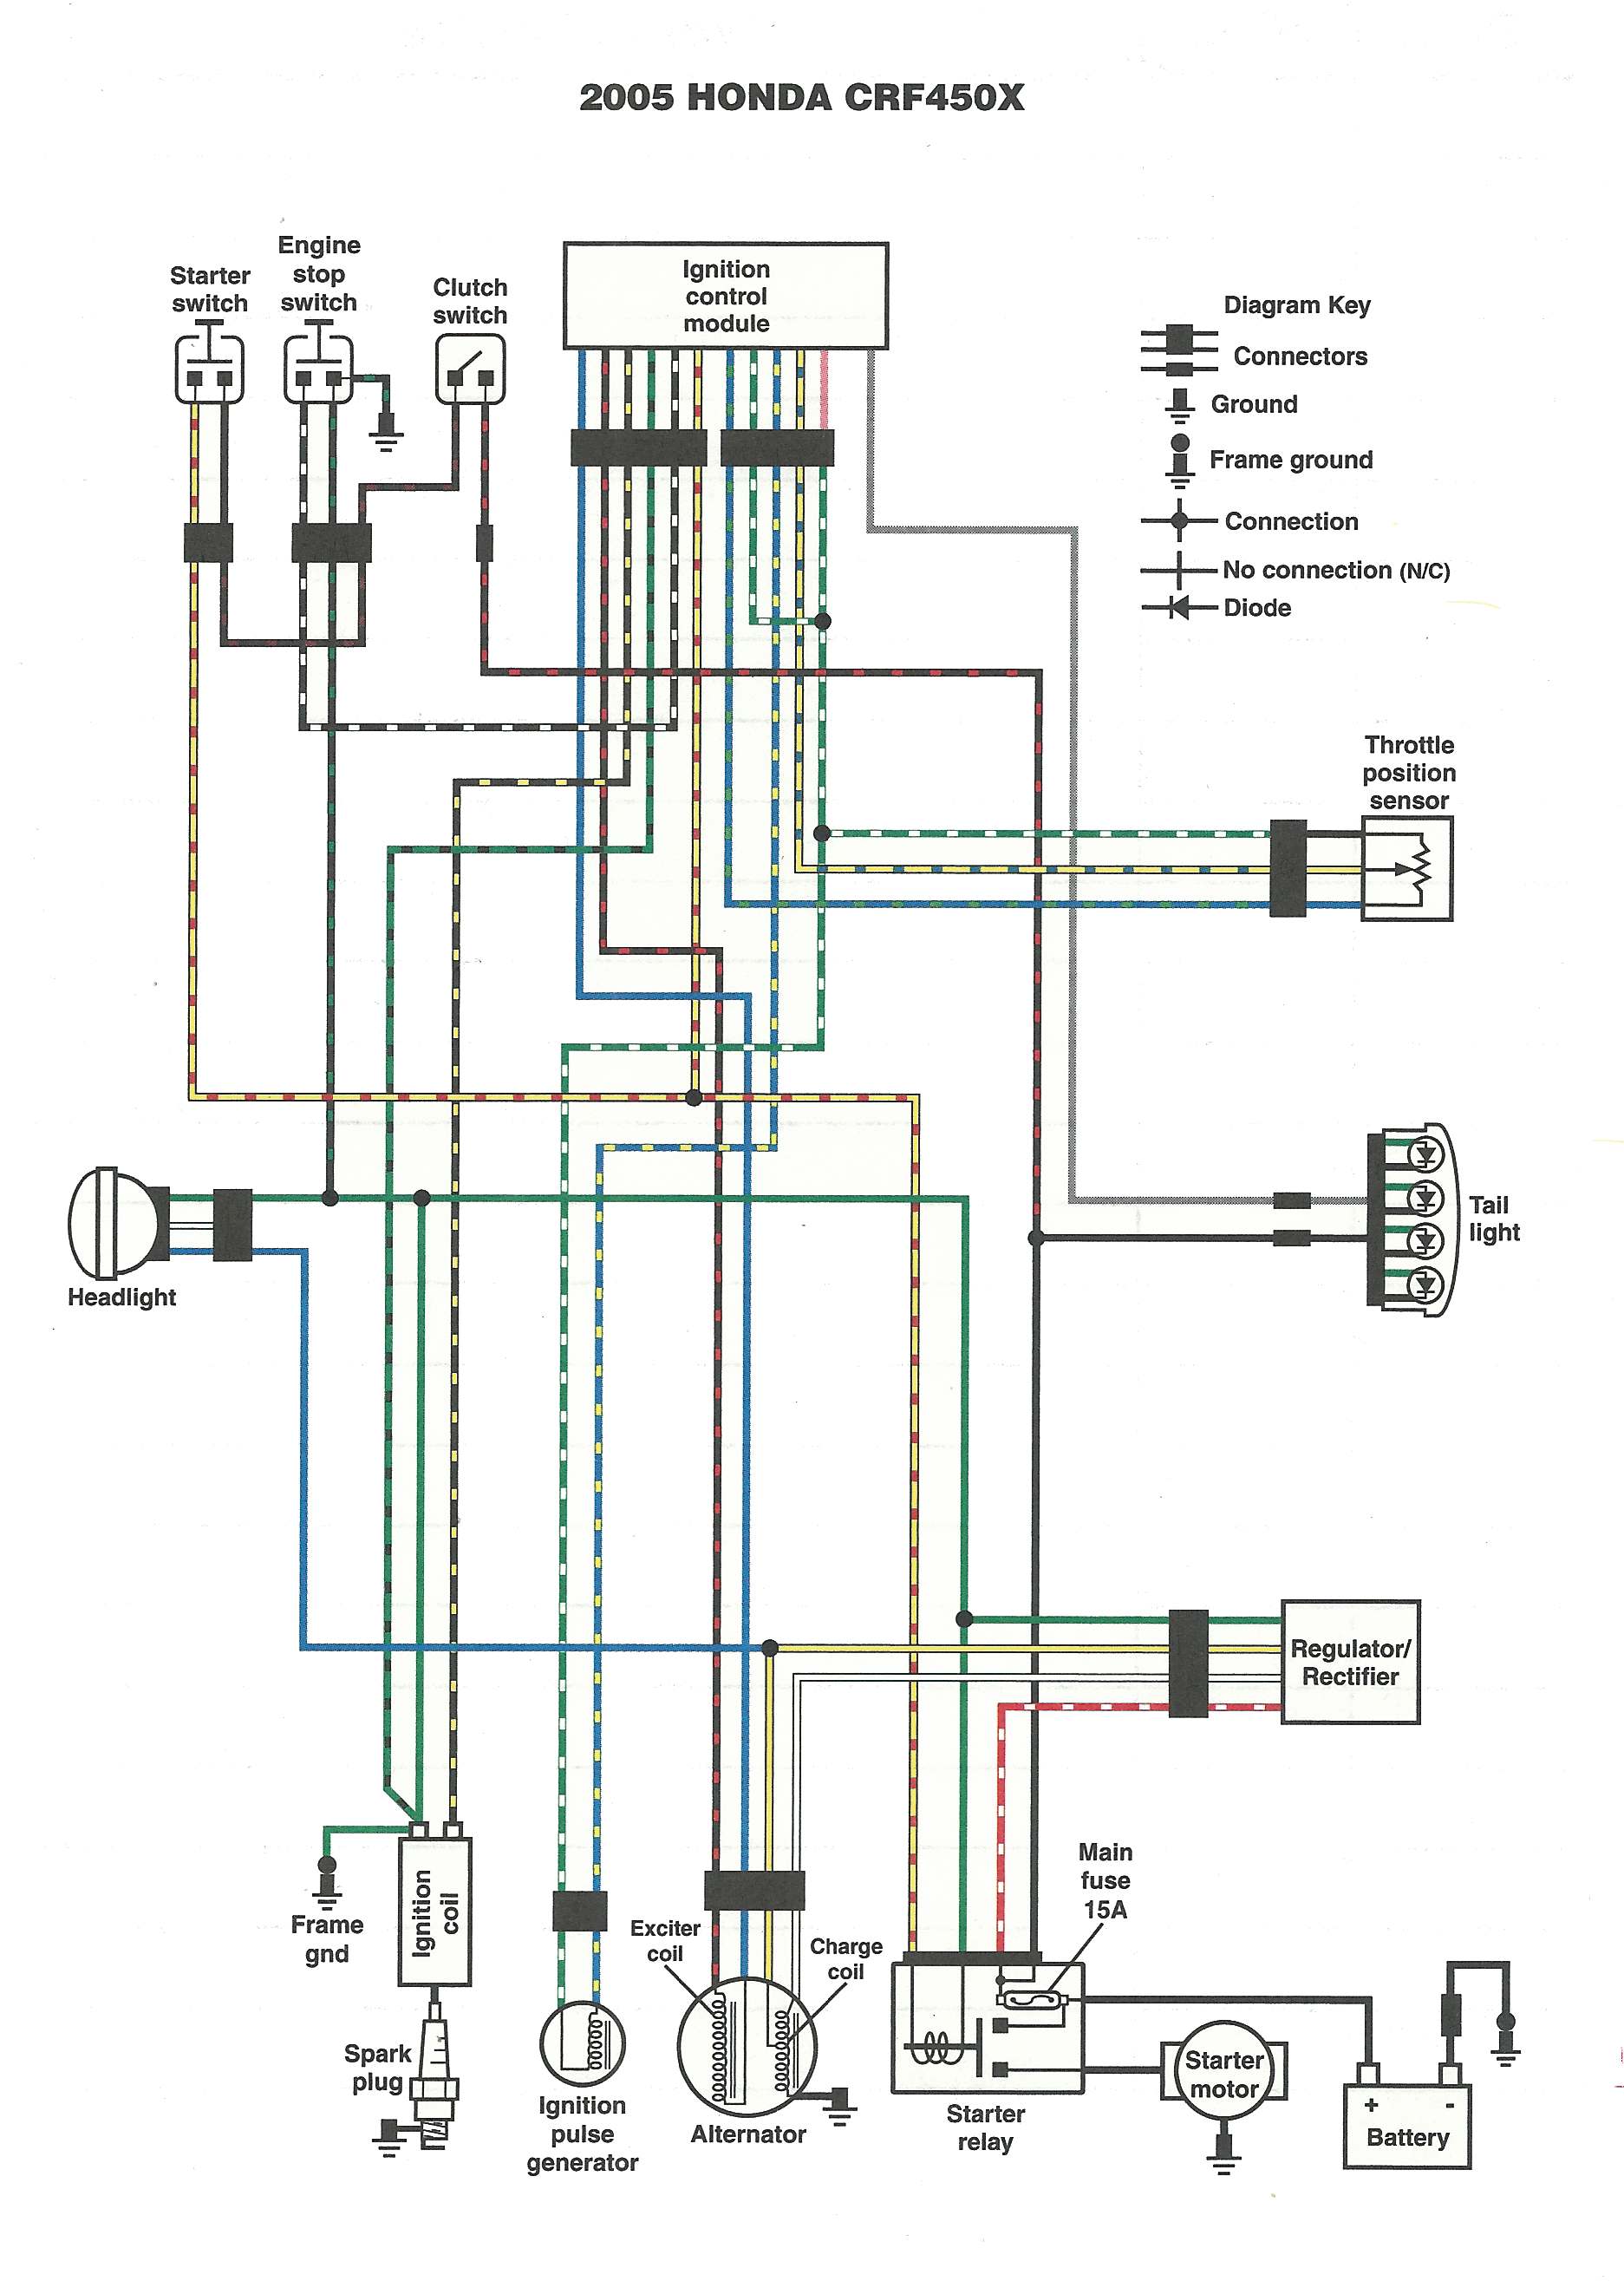 Diagram Snorkel Wiring Diagram Full Version Hd Quality Wiring Diagram Jrwiring1c Prestito Rapido It